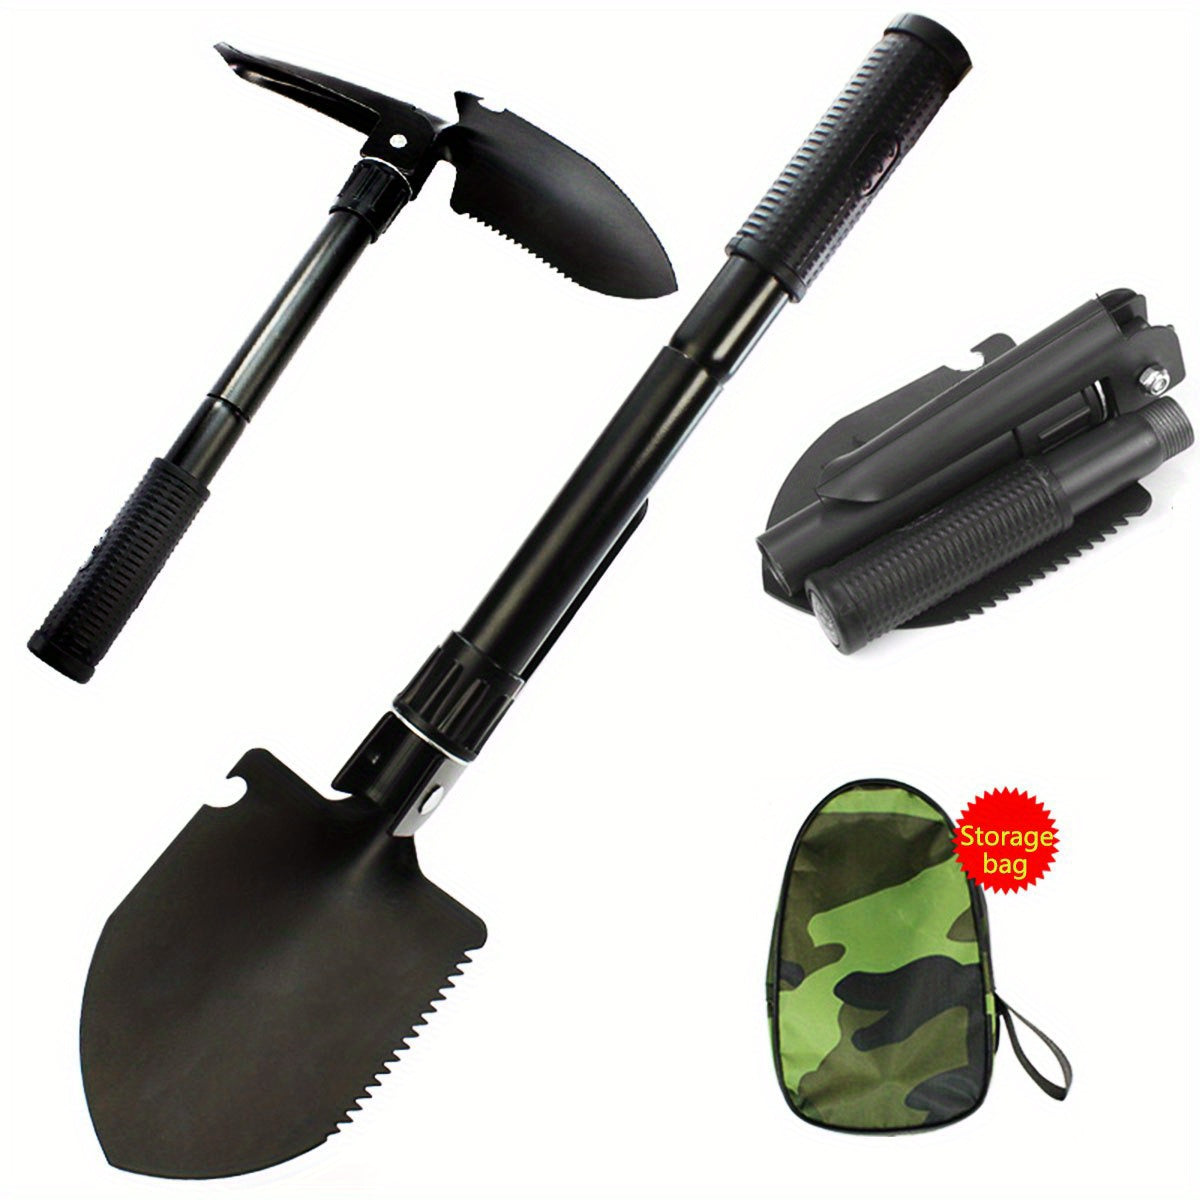 1 Set, Black Multifunctional Foldable Portable Soldier Shovel, Send Camouflage Hangable Waist Storage Bag, Camping Outdoor Spade Good Things, Folding Shovel, Soldier Shovel, Small Folding Shovel/ Pick, Camping Folding Small Spade